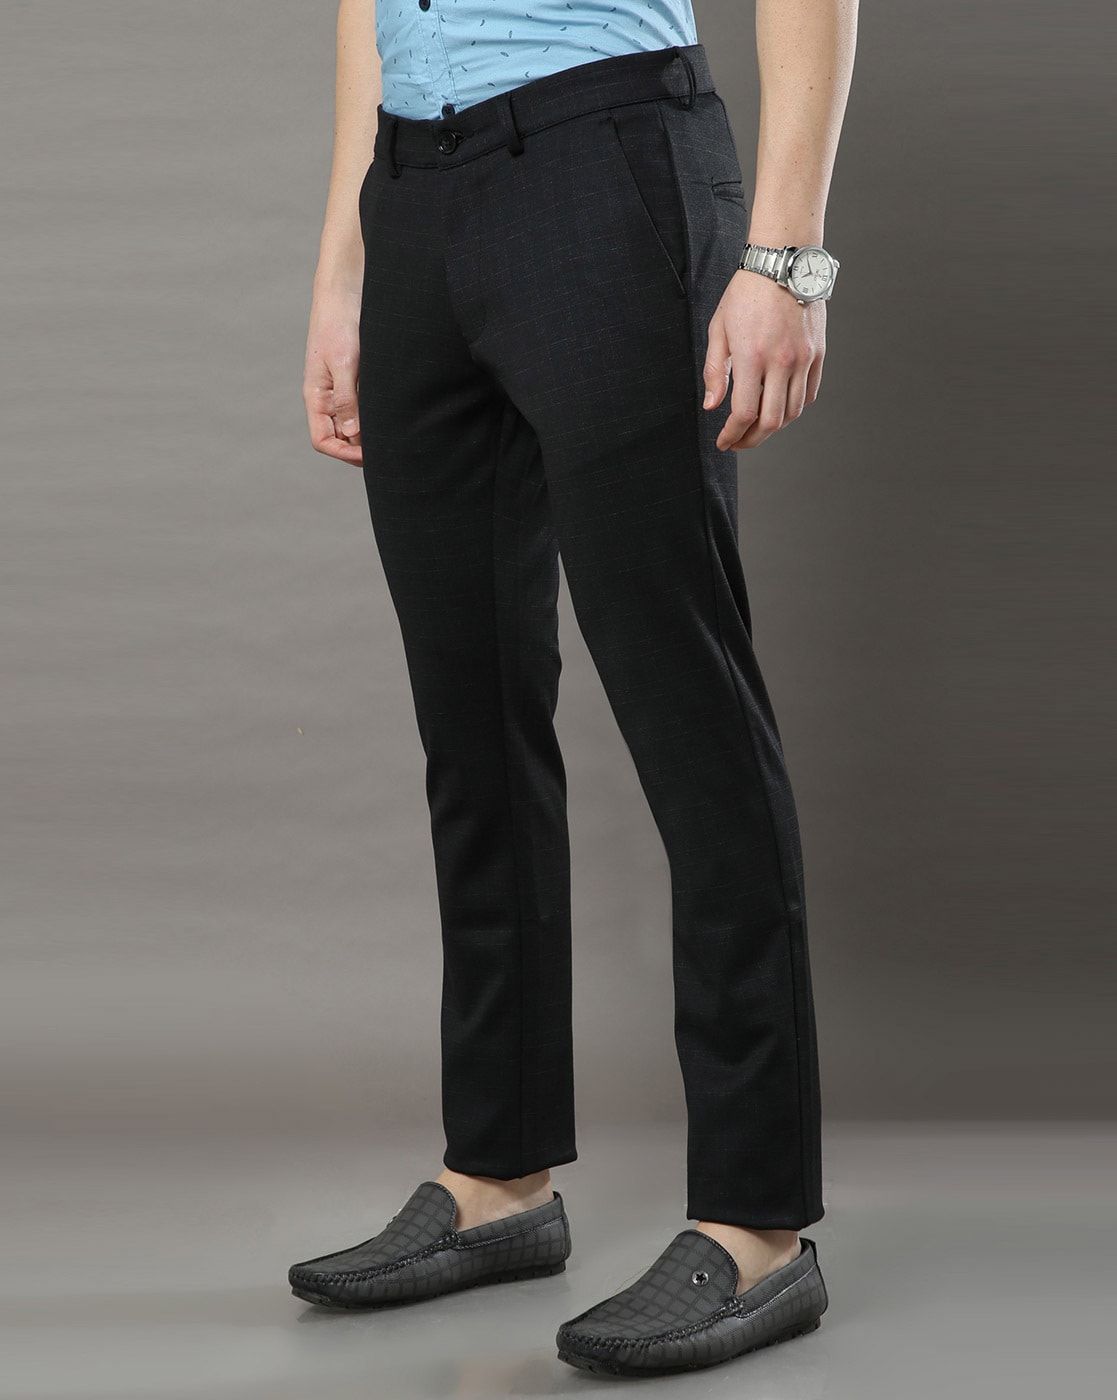 Khaki Men's Ankle Length Slim Fit Formal Office Business Casual Pants 33 /  618 Black | Slim fit formal pants, Formal pant for men, Leisure wear